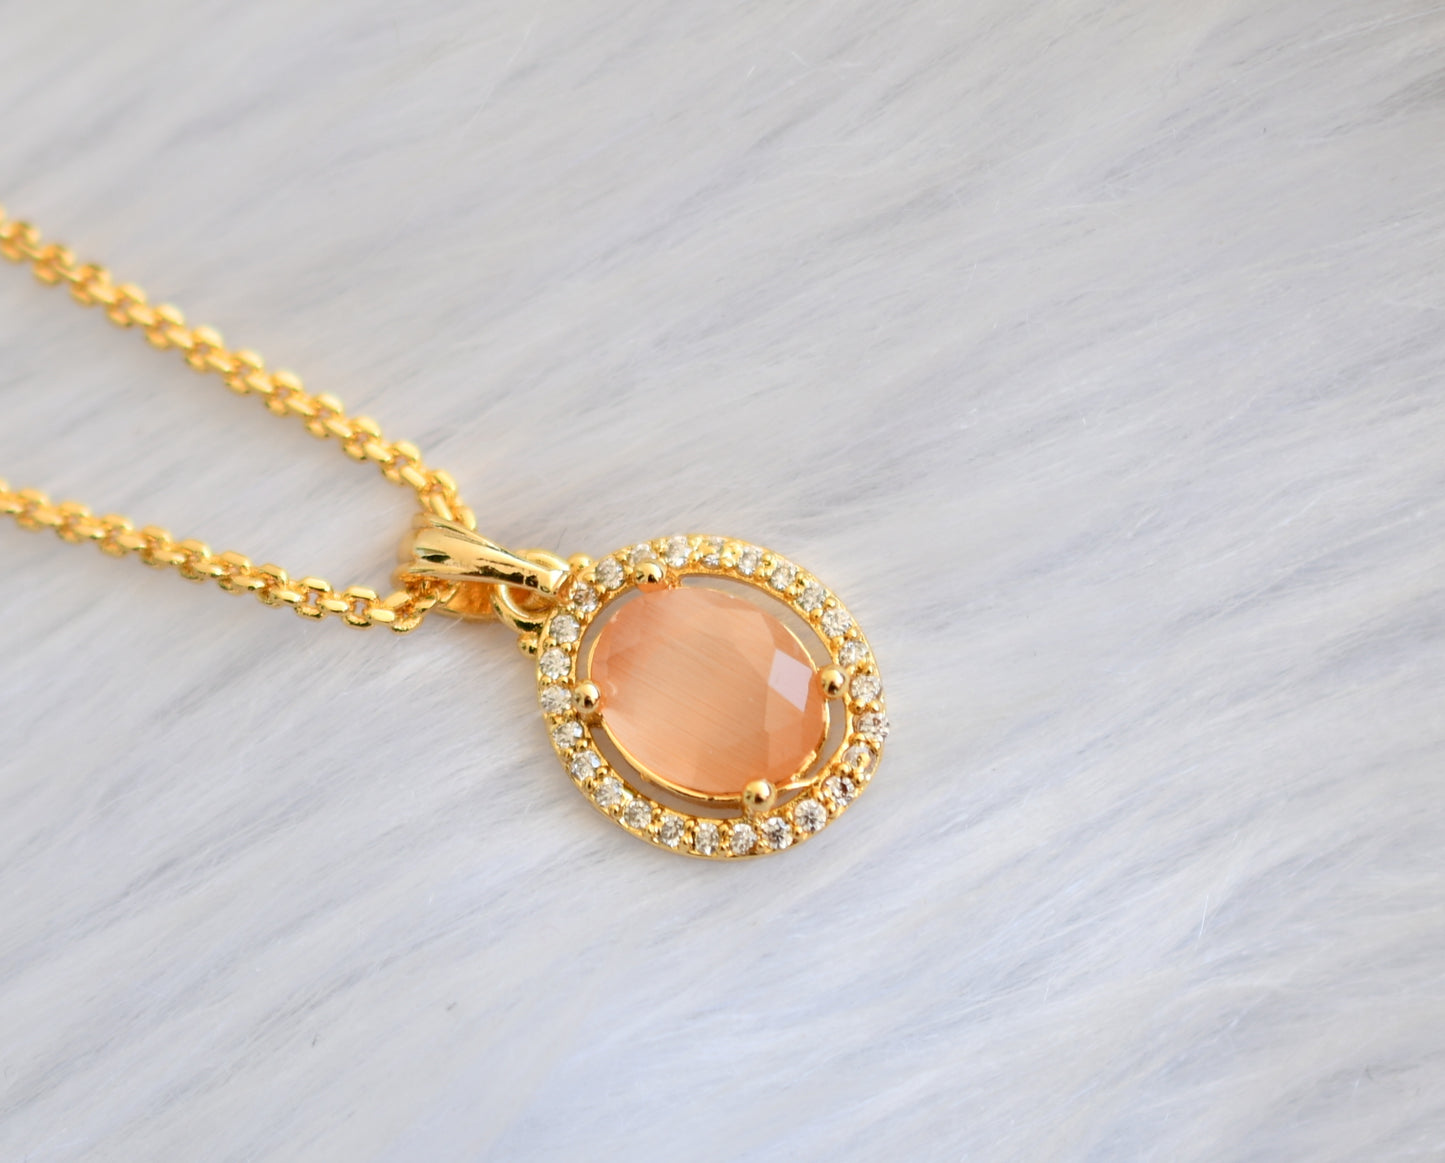 Gold tone white-orange pendant with chain dj-39975